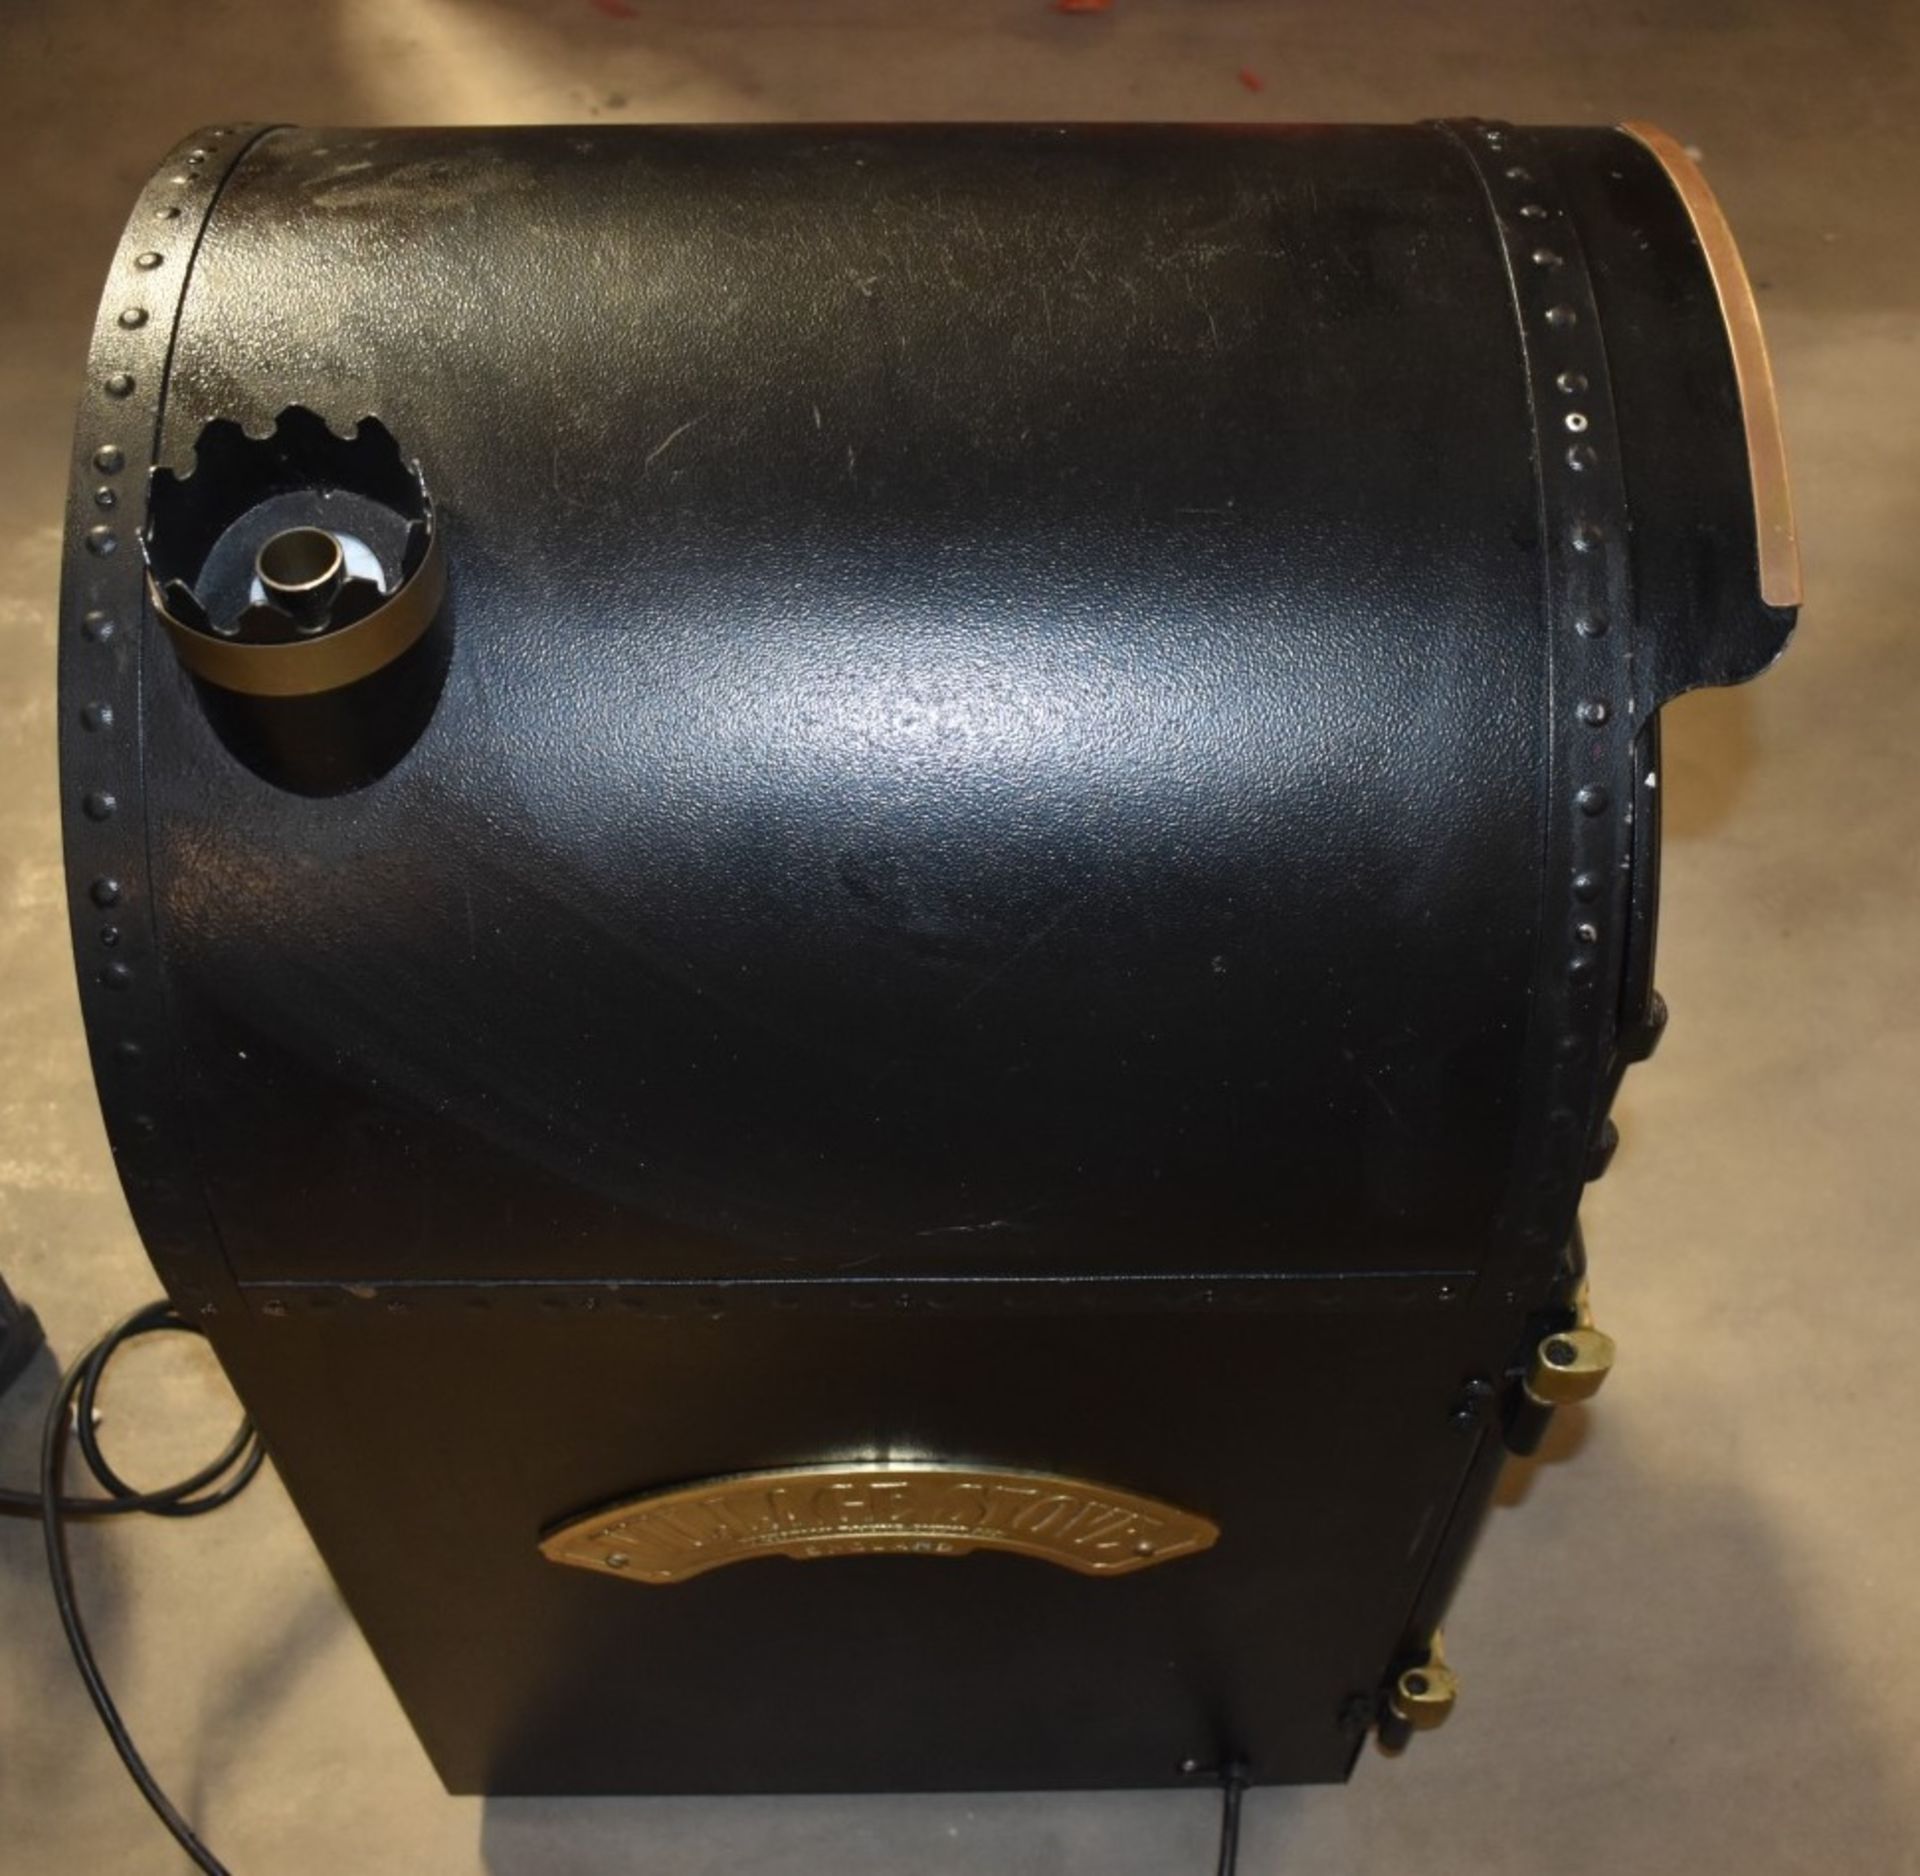 1 x Victorian Village Stove Potato Baking Oven - Model VS - 45 Potato Capacity - Approx RRP £2,600 - Image 18 of 18